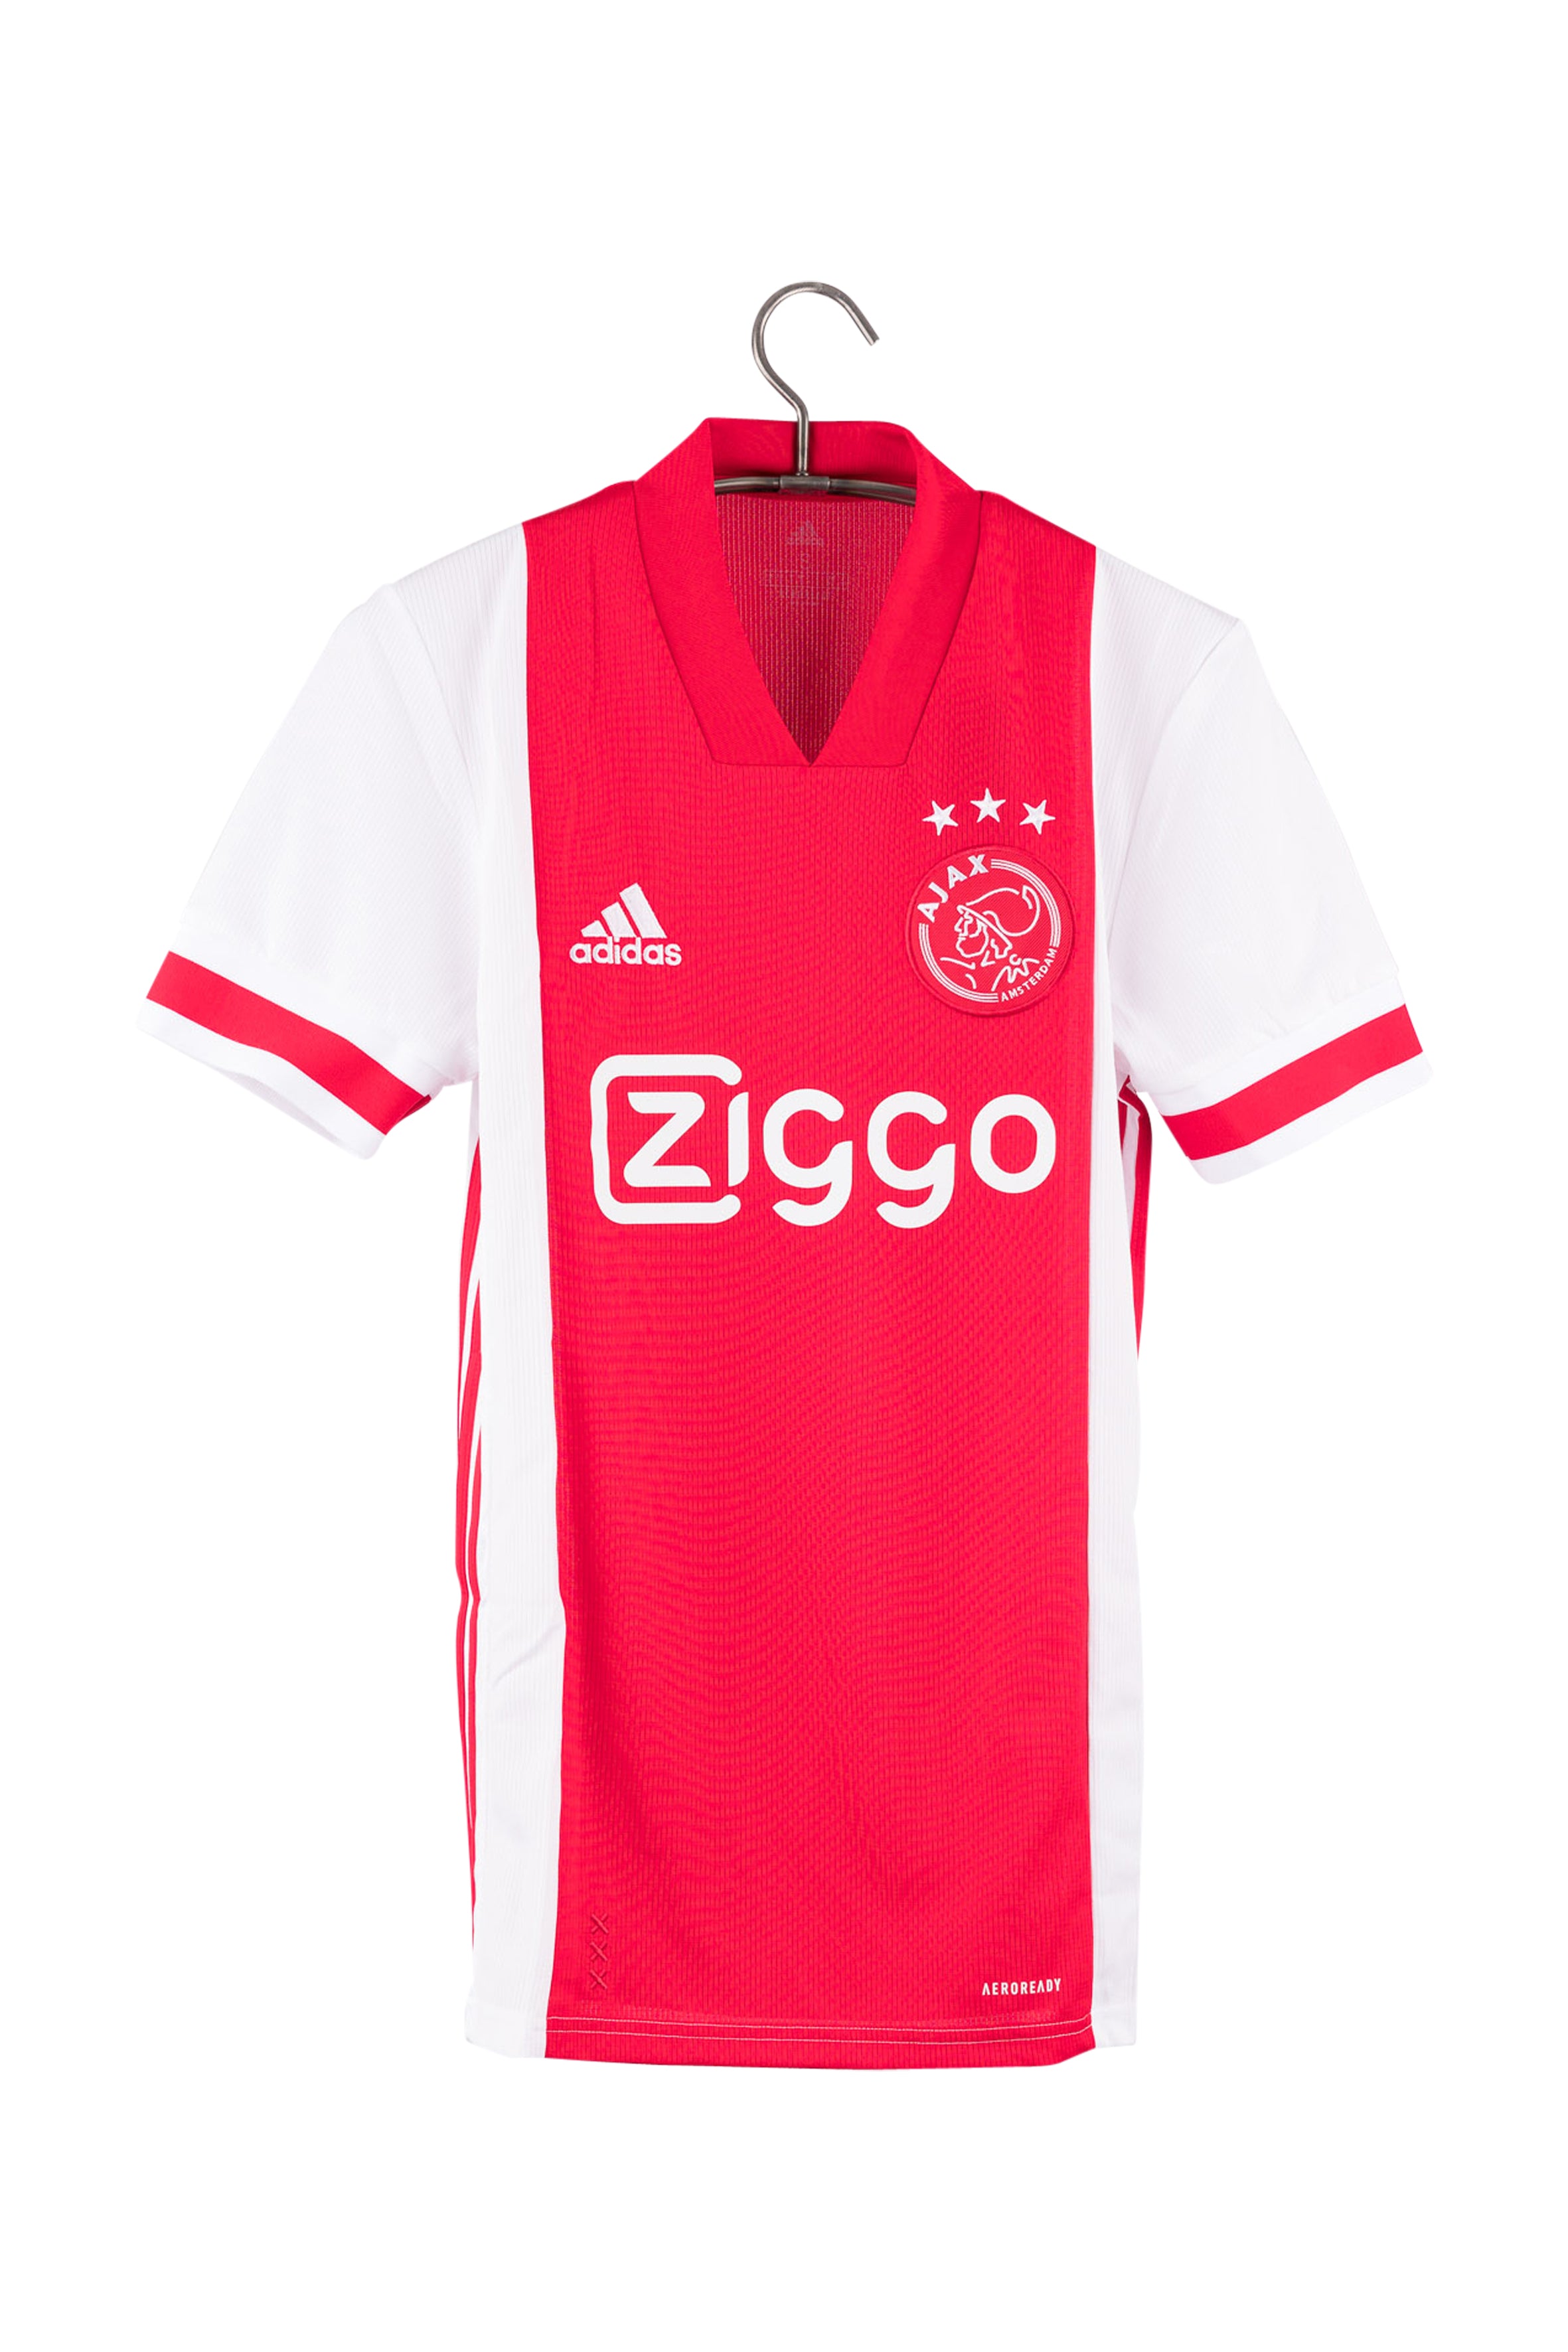 verdrietig Conventie lamp Ajax 2020 - 2021 Home Football Shirt – Special Football Shirts